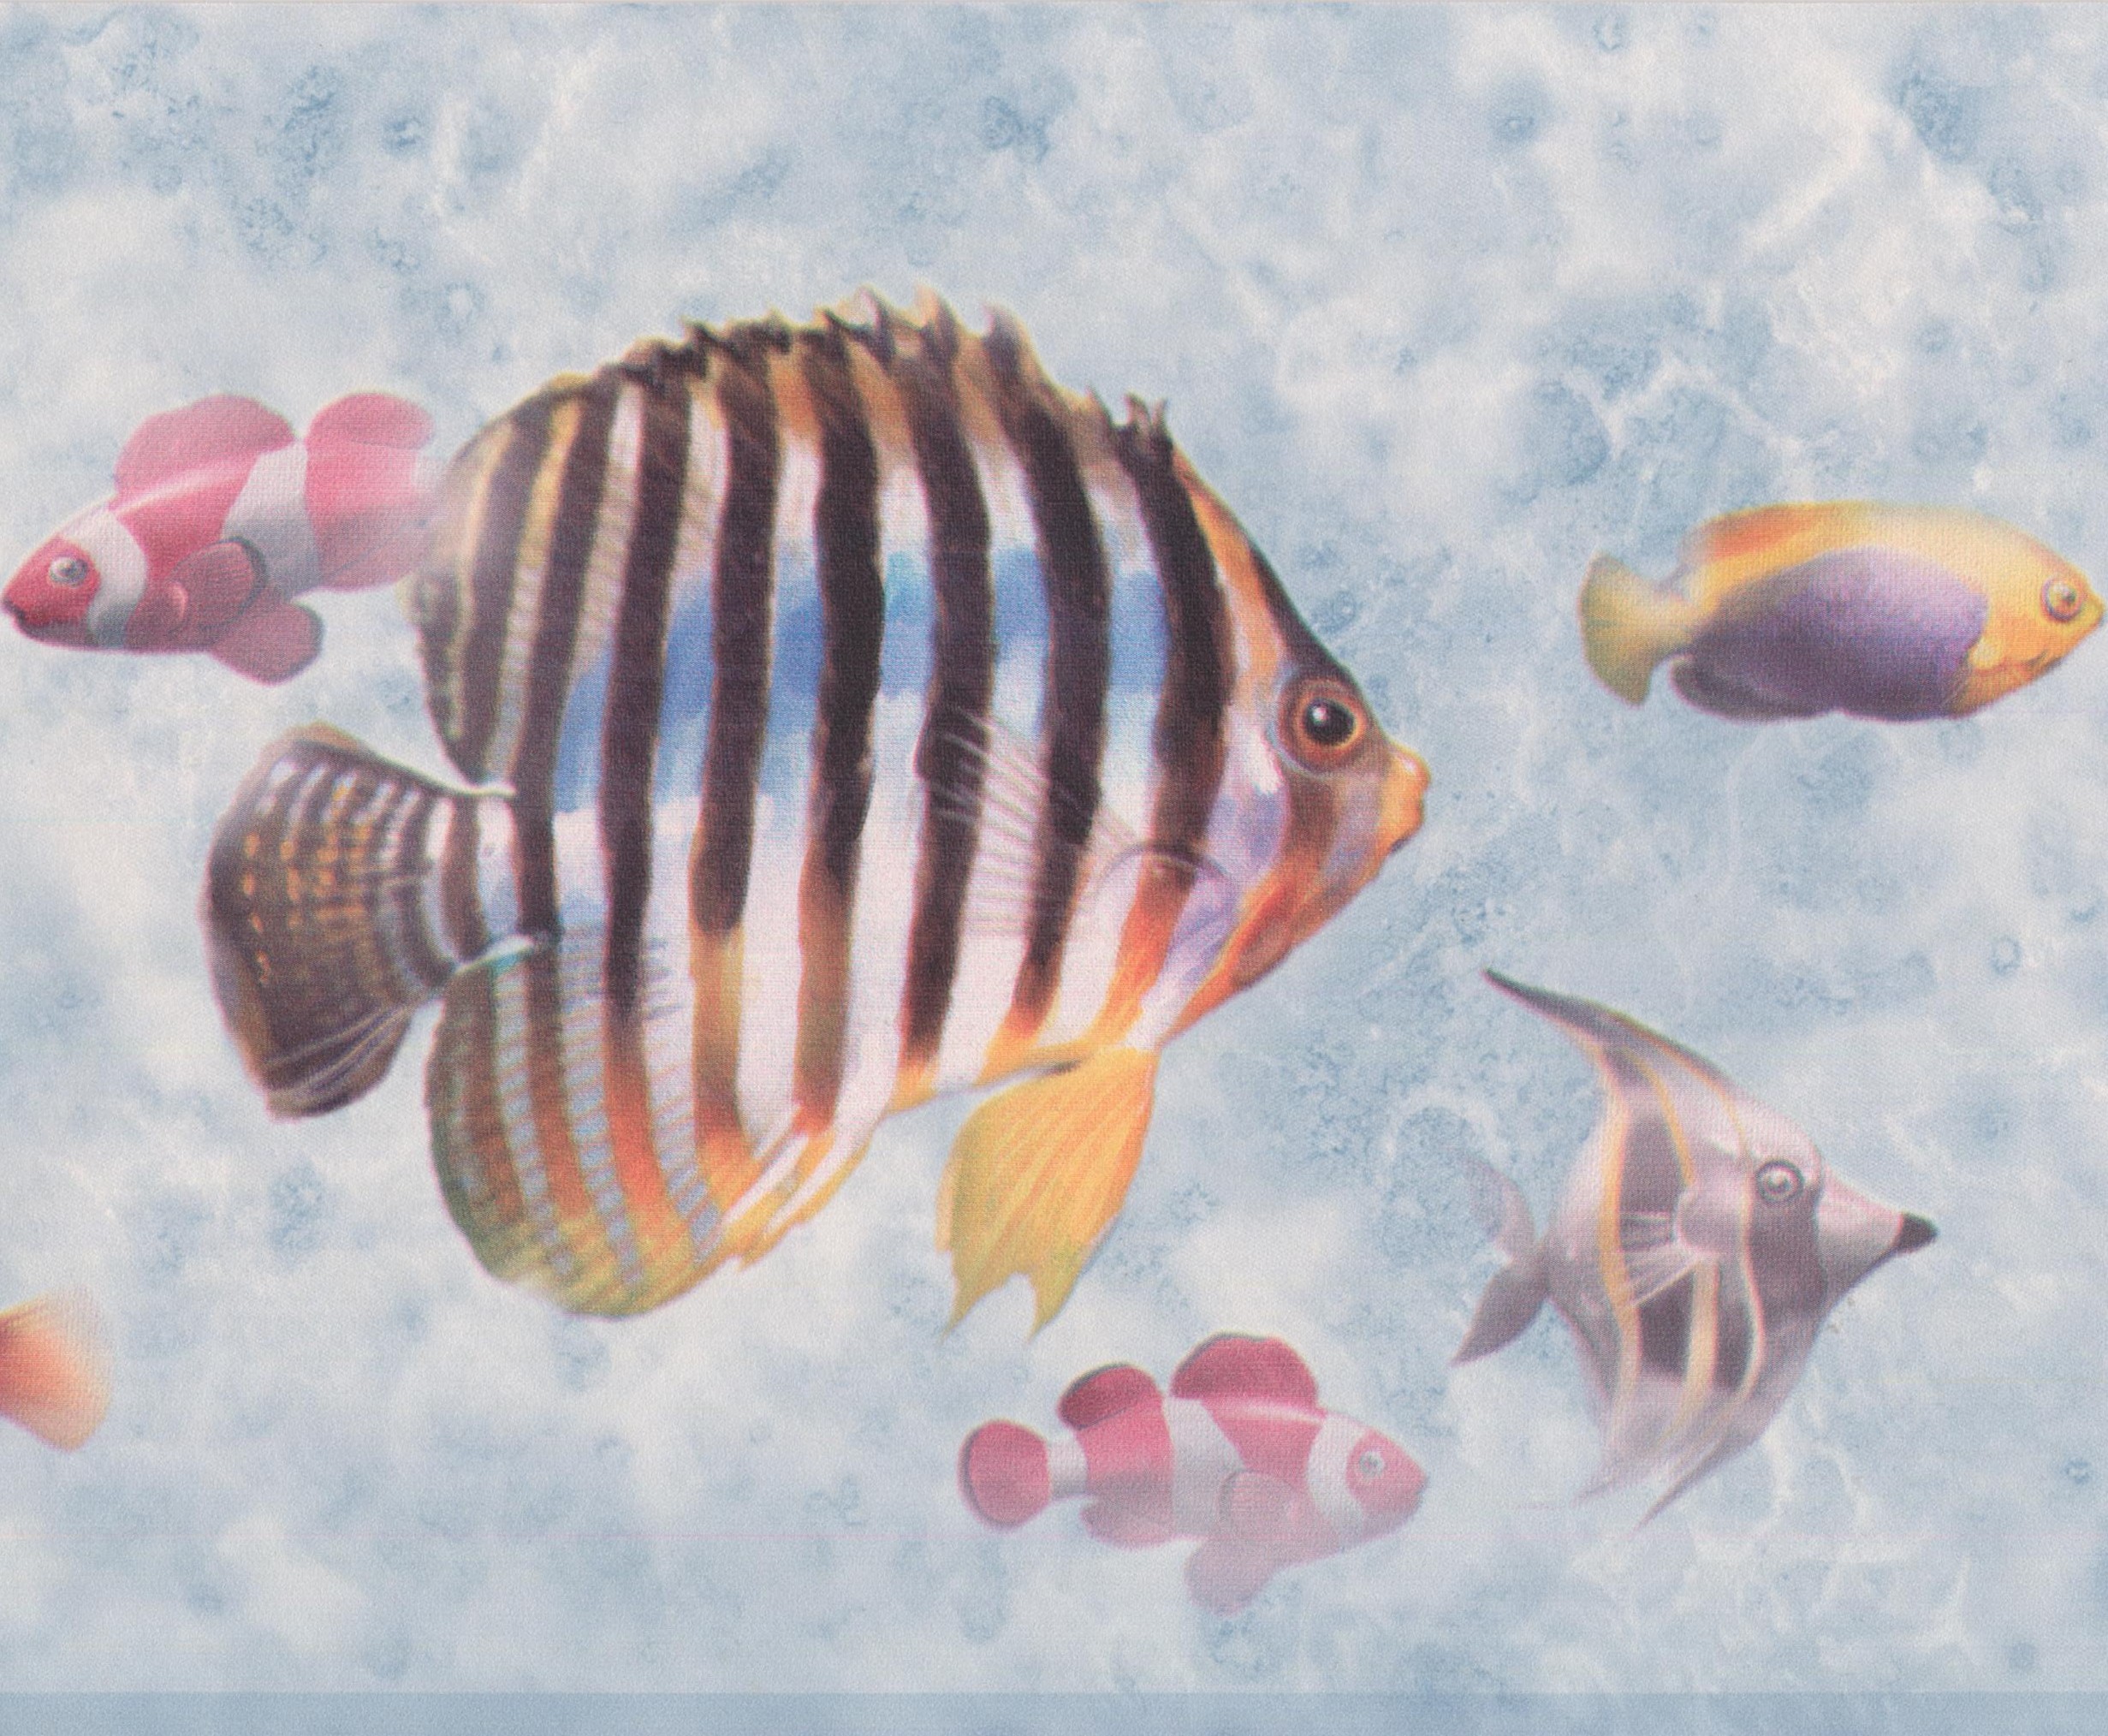 Coral Reef Fish - HD Wallpaper 